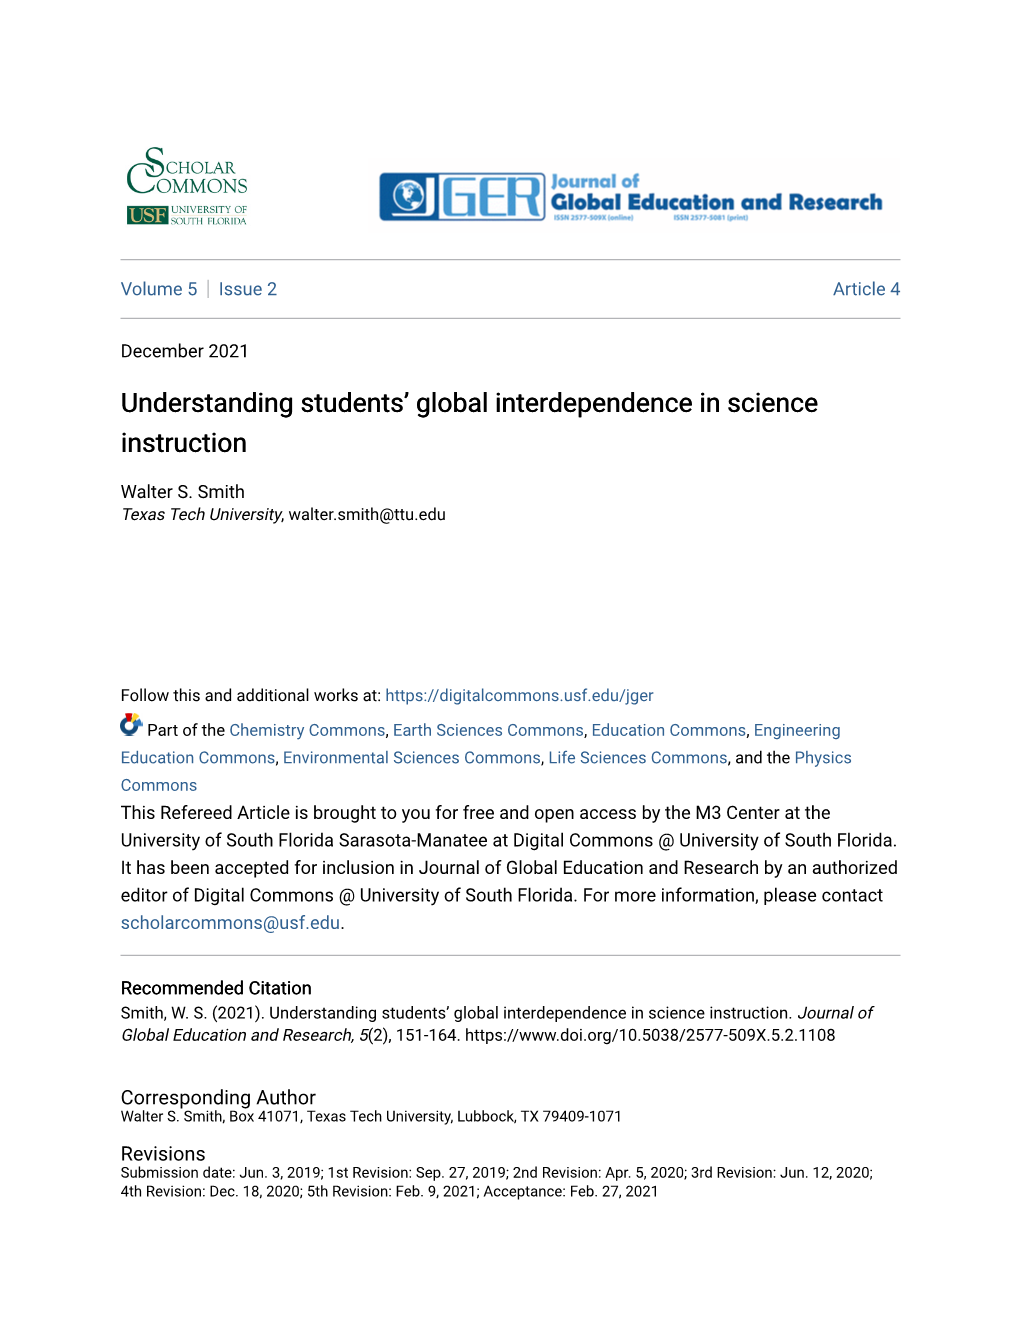 Understanding Students' Global Interdependence in Science